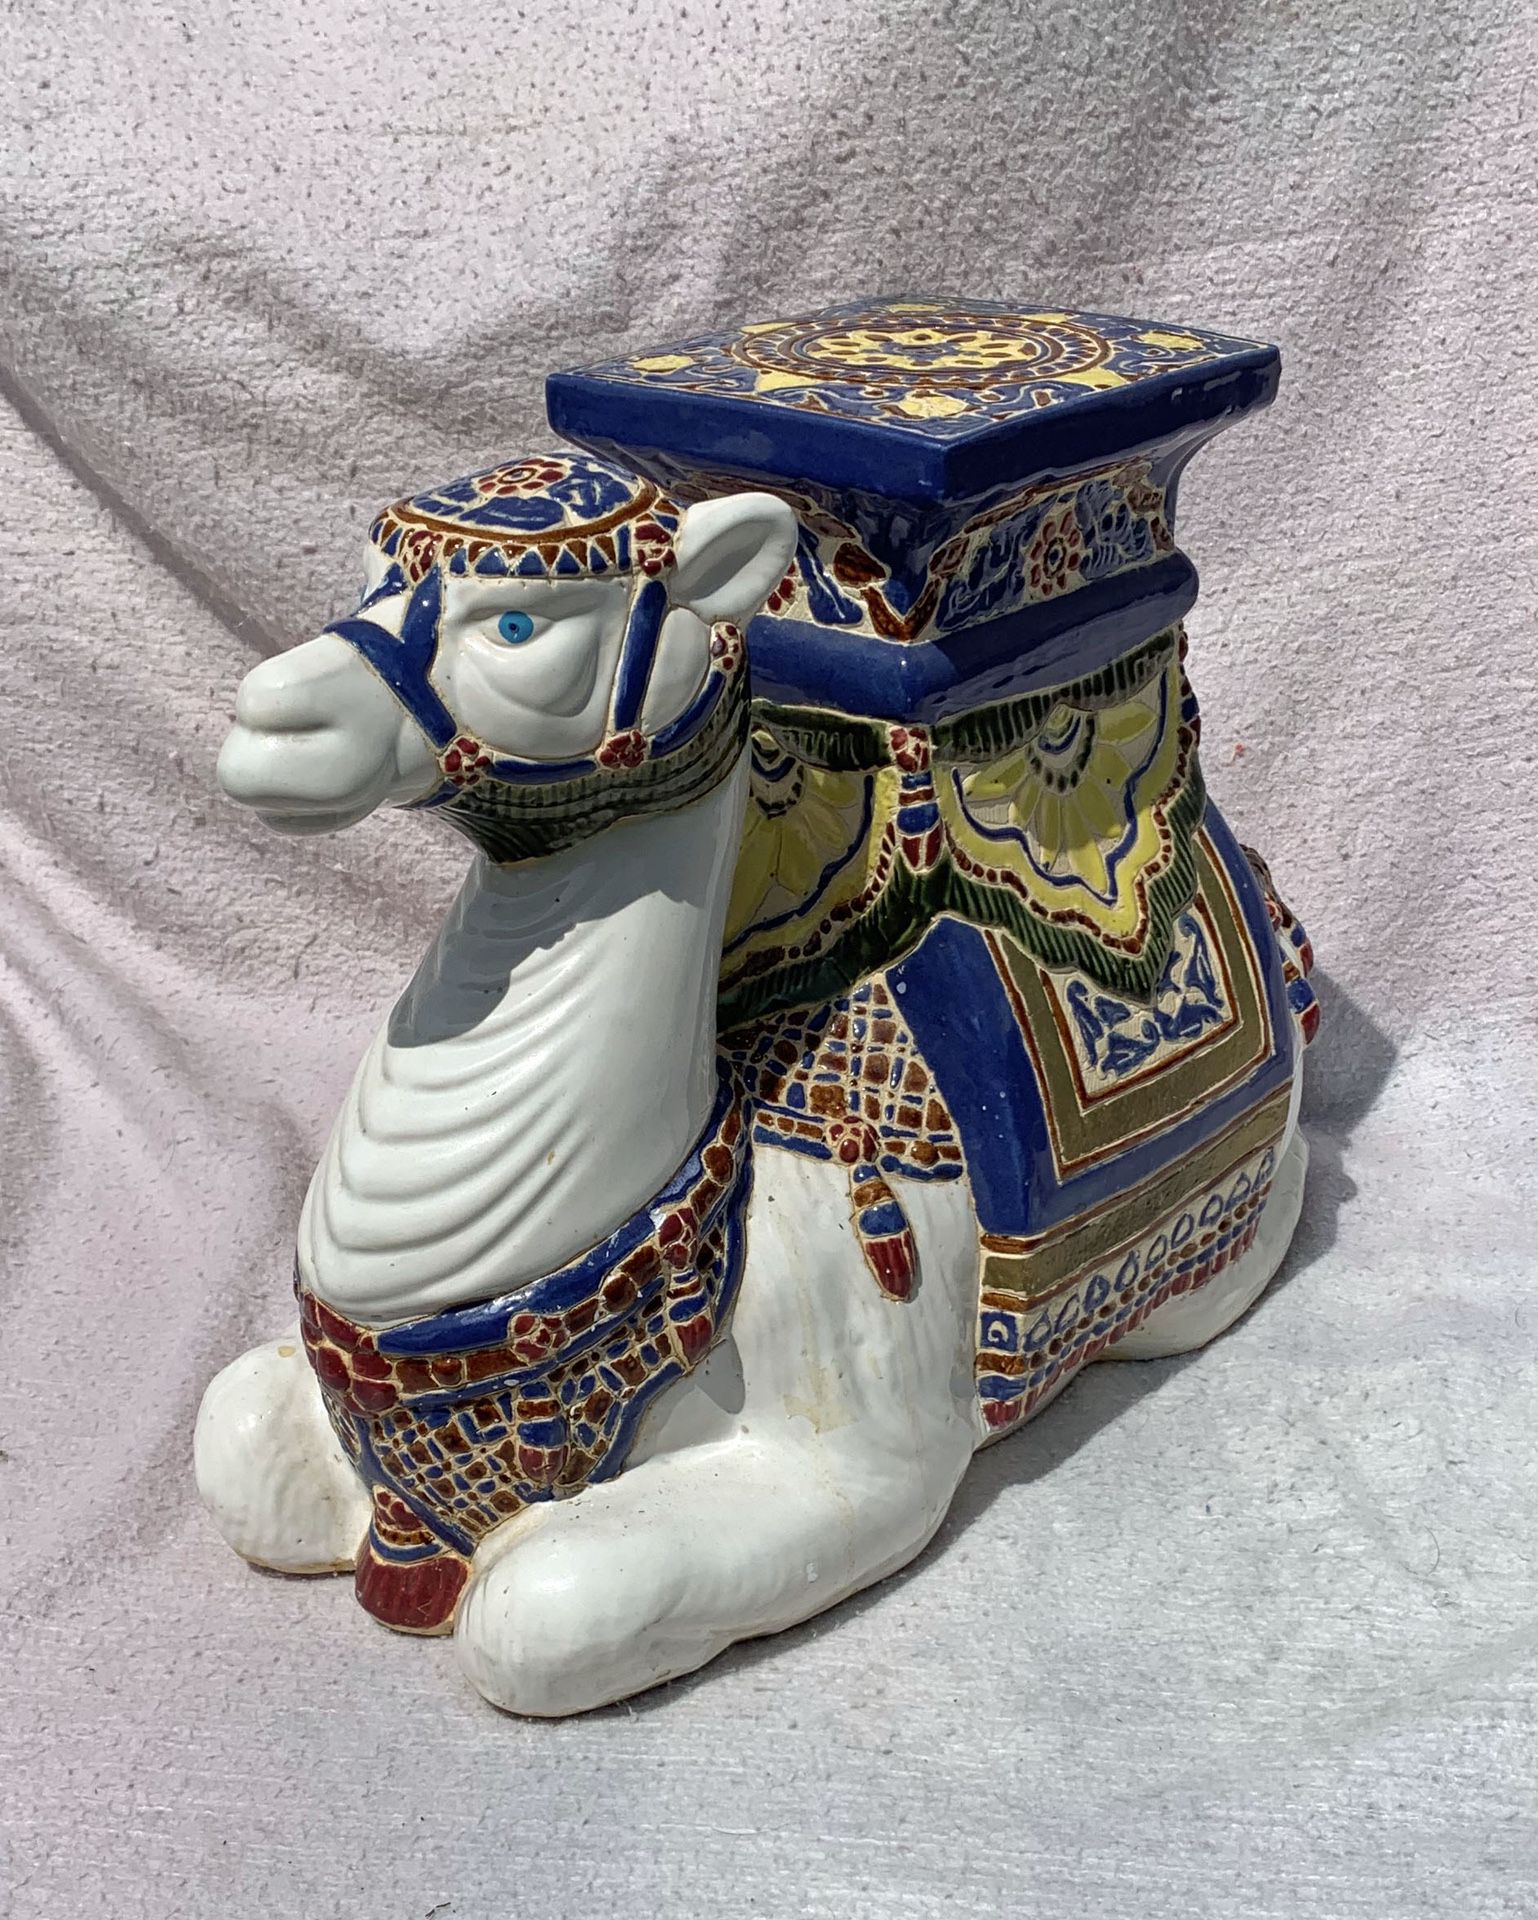 Antique porcelain camel